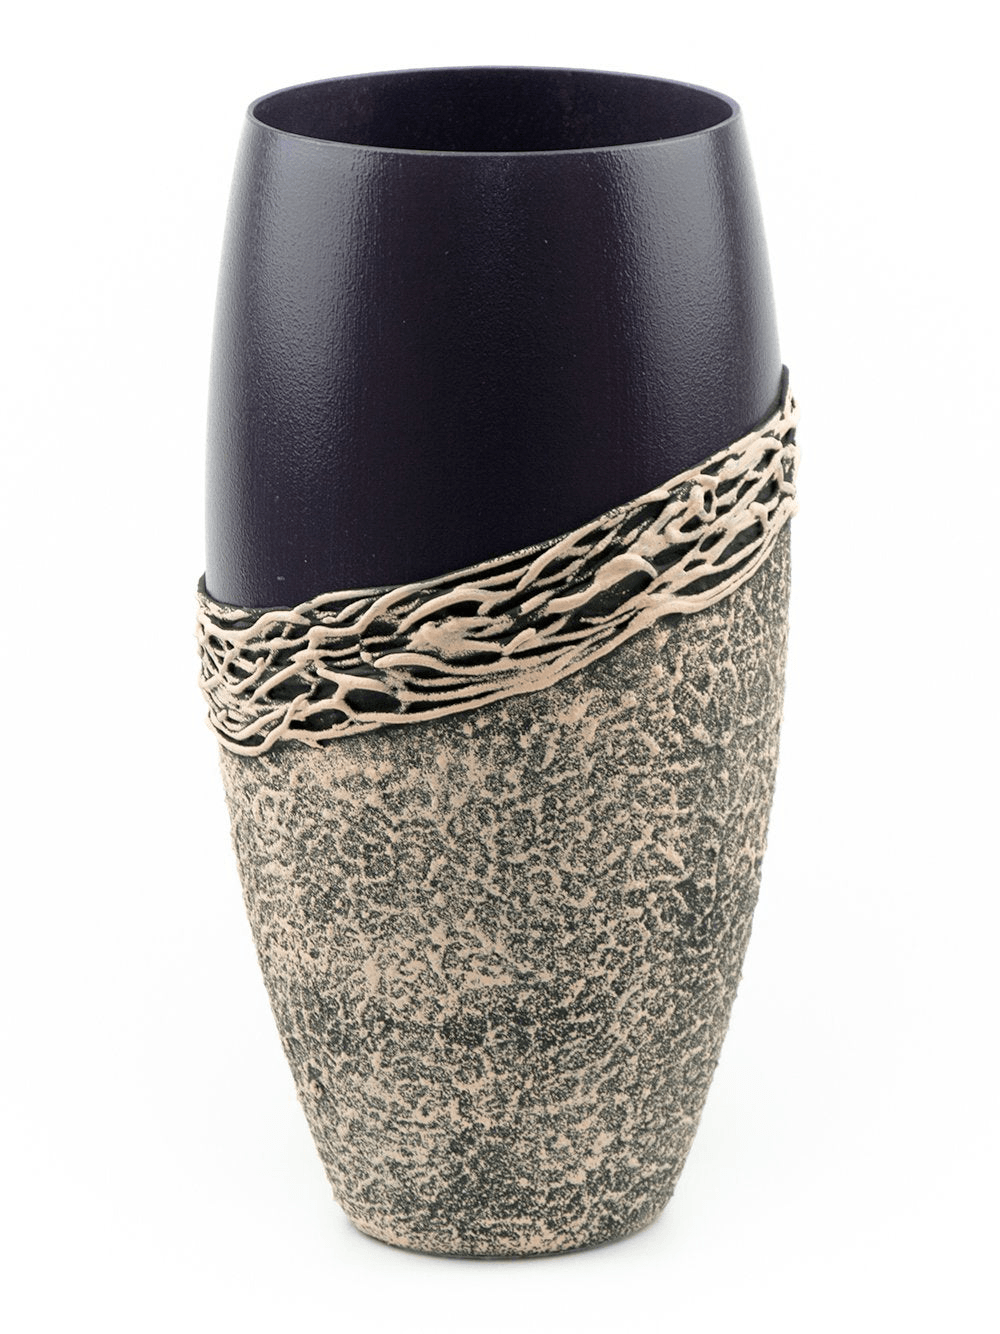 Handpainted Glass Vase for Flowers | Painted Art Glass Violet Oval Vase | Interior Design Home Room Decor | Table vase 12 inch | 7518/300/sh039  